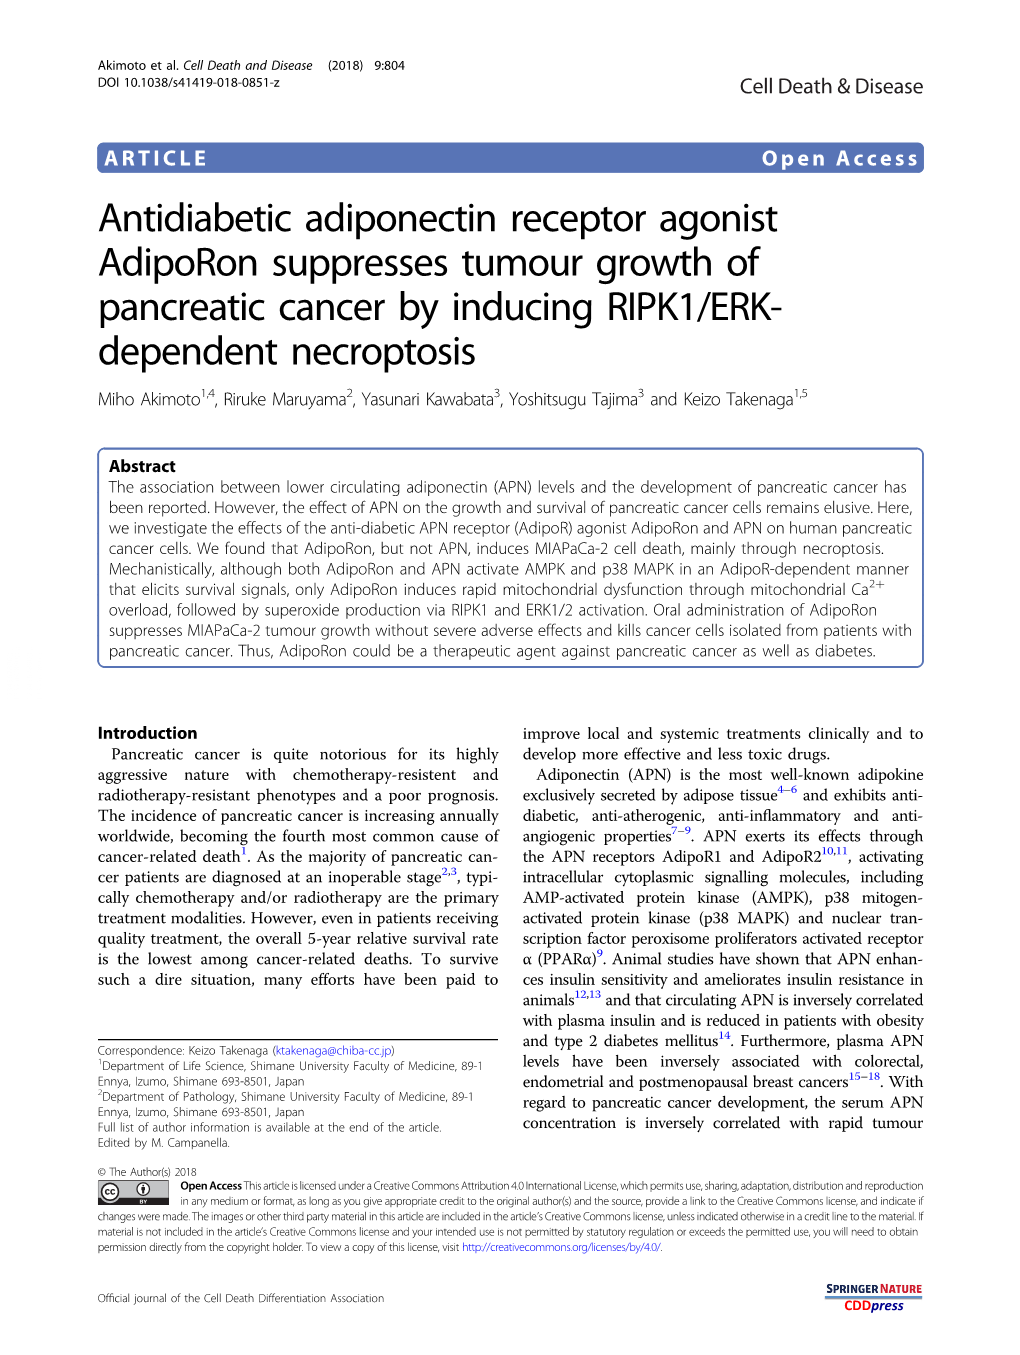 Antidiabetic Adiponectin Receptor Agonist Adiporon Suppresses